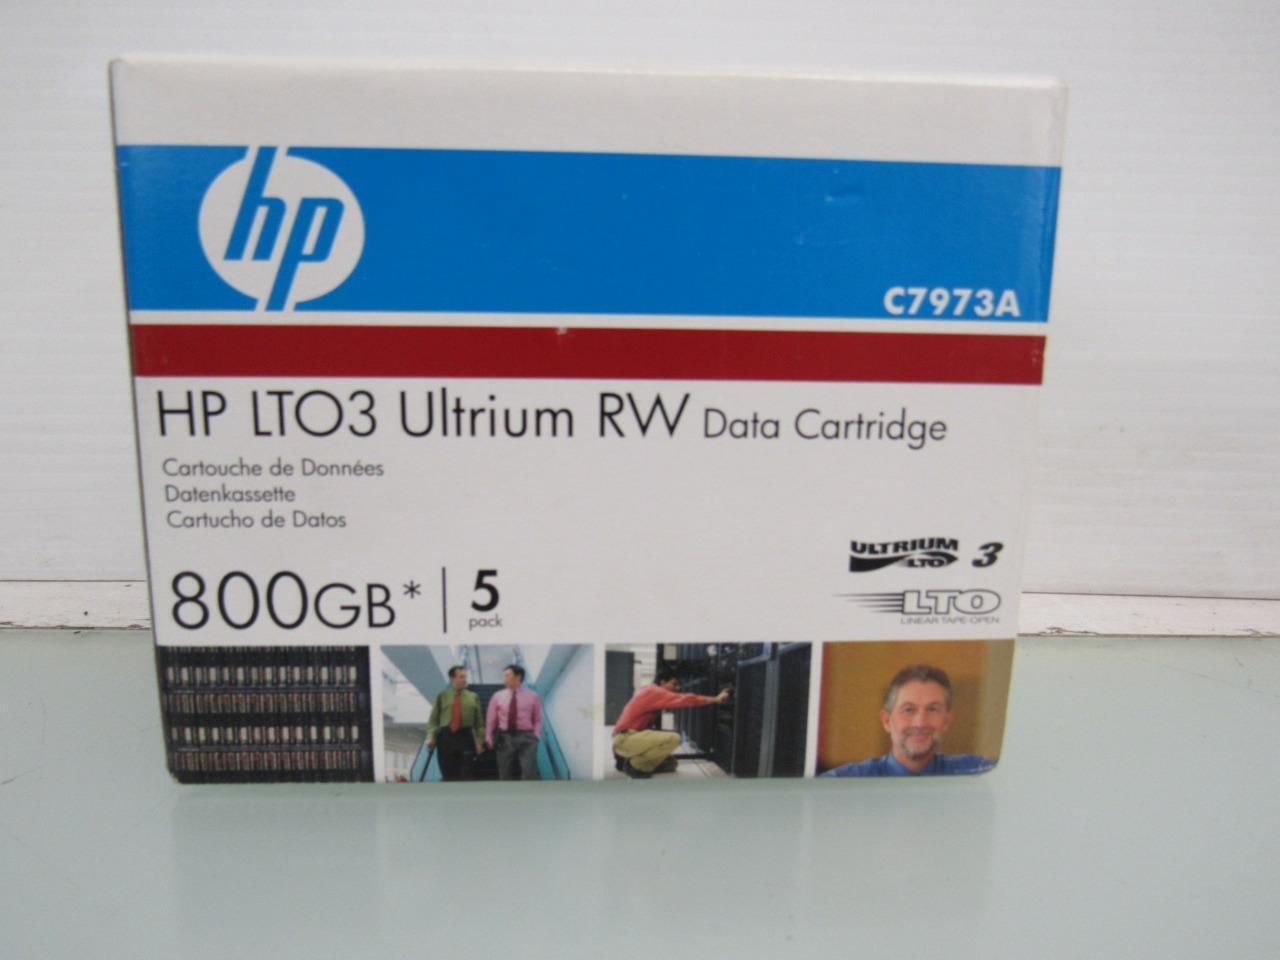 5 Pack HP C7973A LTO3 Ultrium RW 800GB Data Cartridge Brand New Factory Sealed